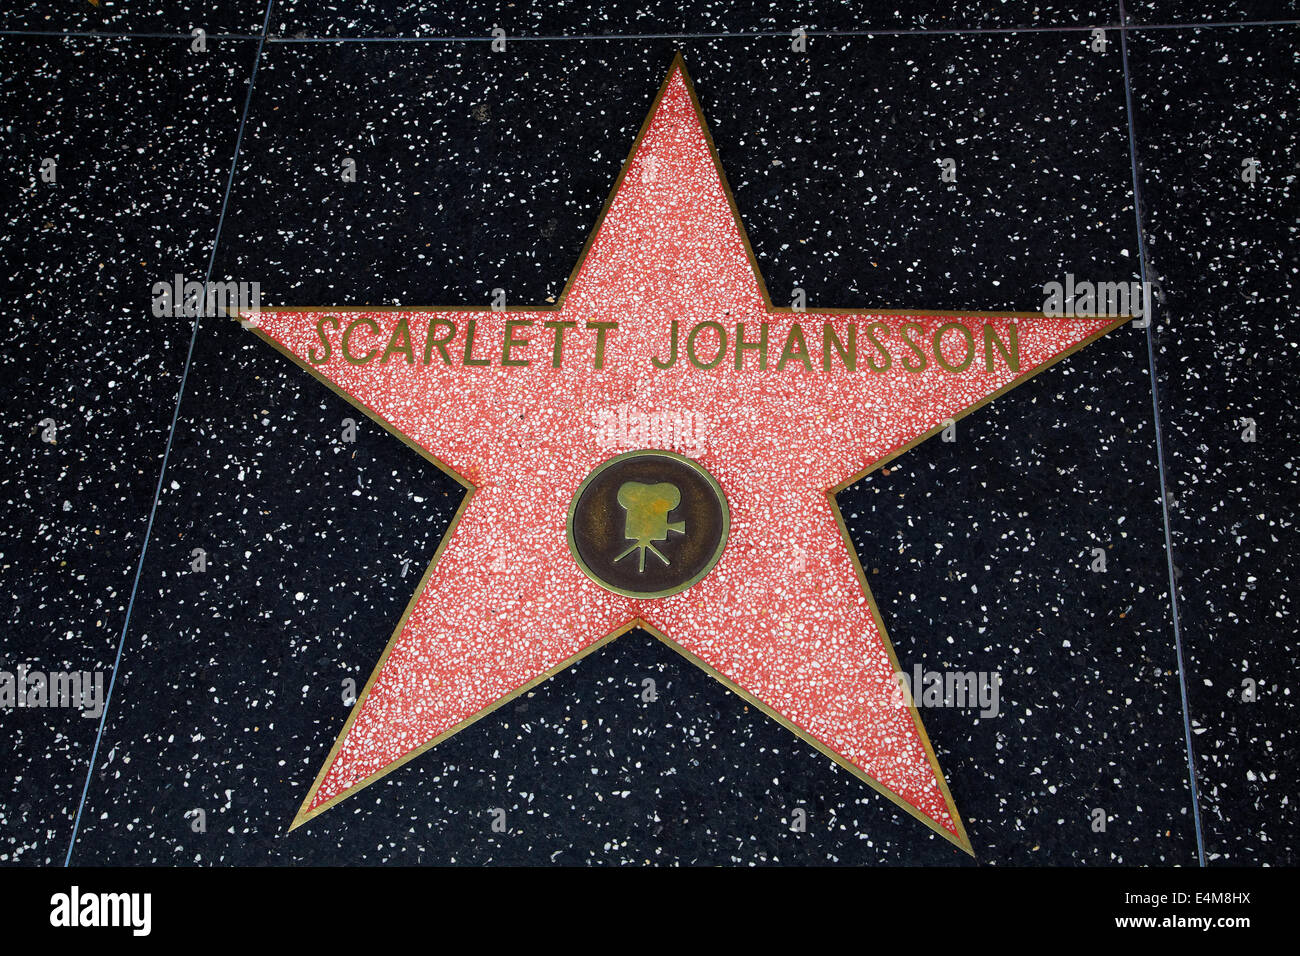 Scarlett Johansson star on Hollywood Walk of Fame, Hollywood Boulevard, Hollywood, Los Angeles, California, USA Stock Photo